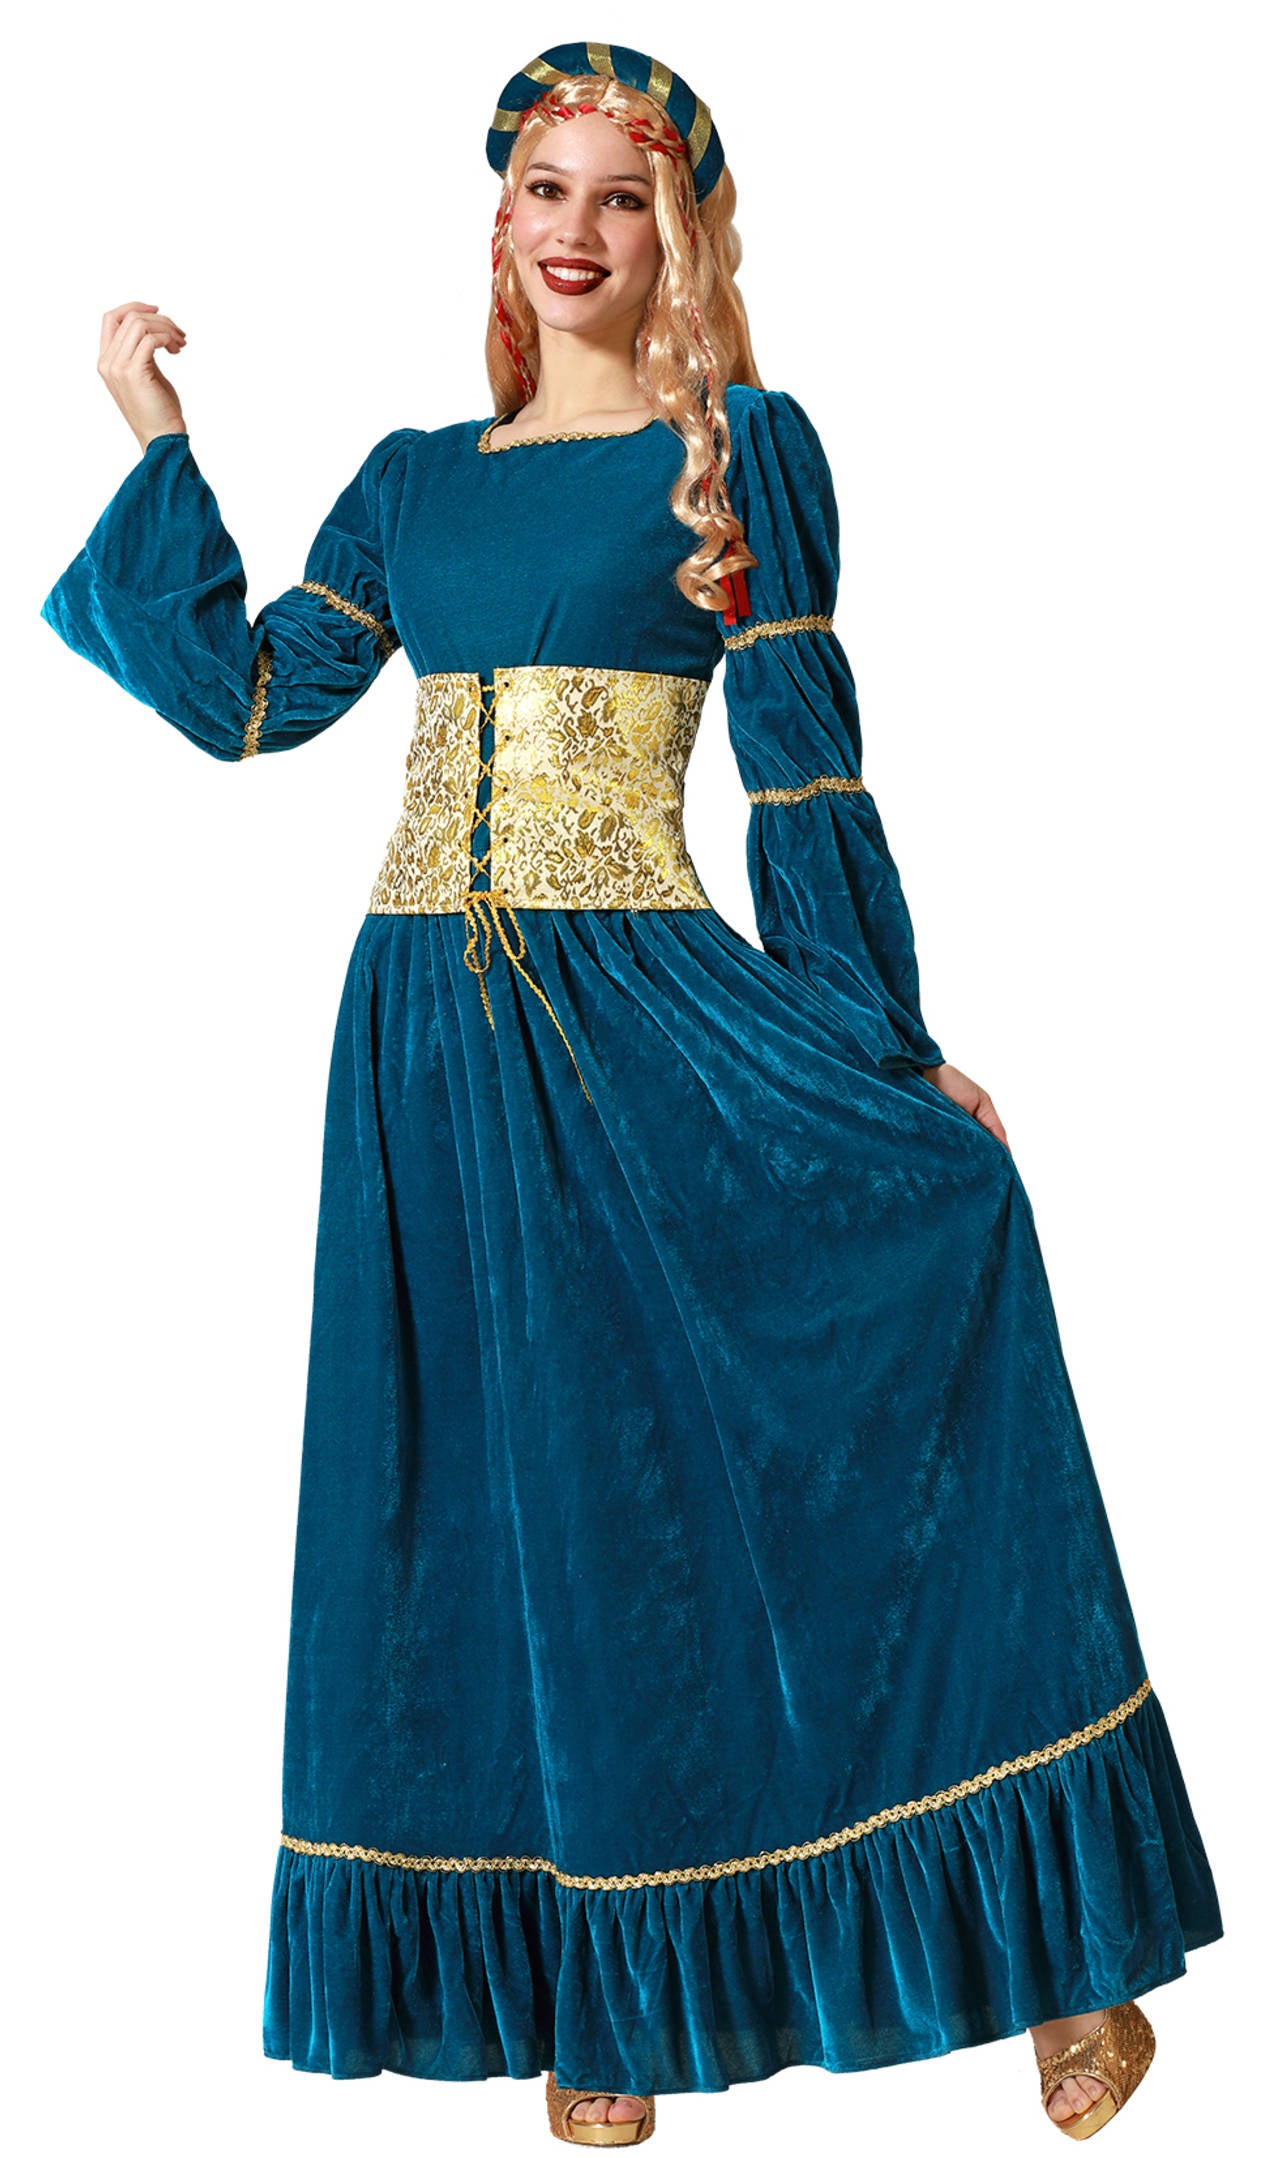 Acquista online costume da principessa medievale Merida per adulto